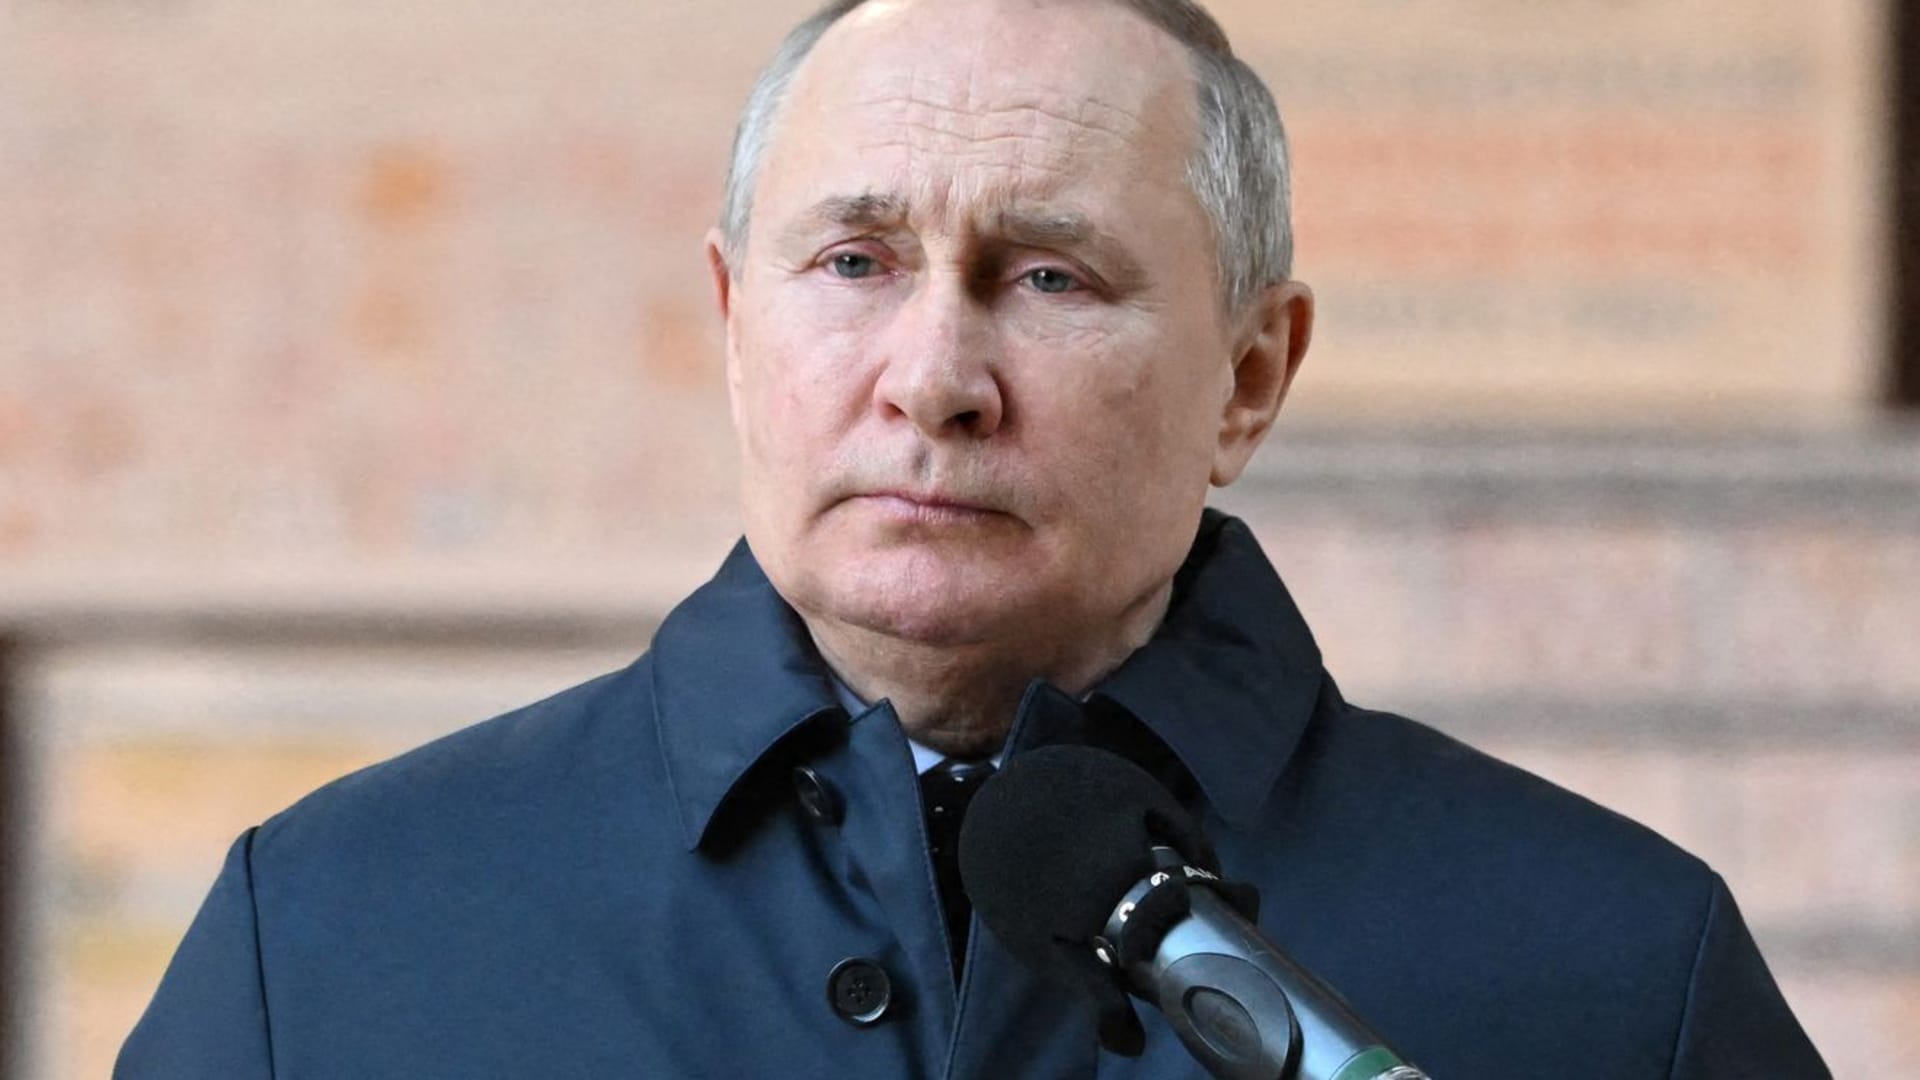 Vladimir Putin feels his military leaders misled him about Ukraine, declassified intelligence shows